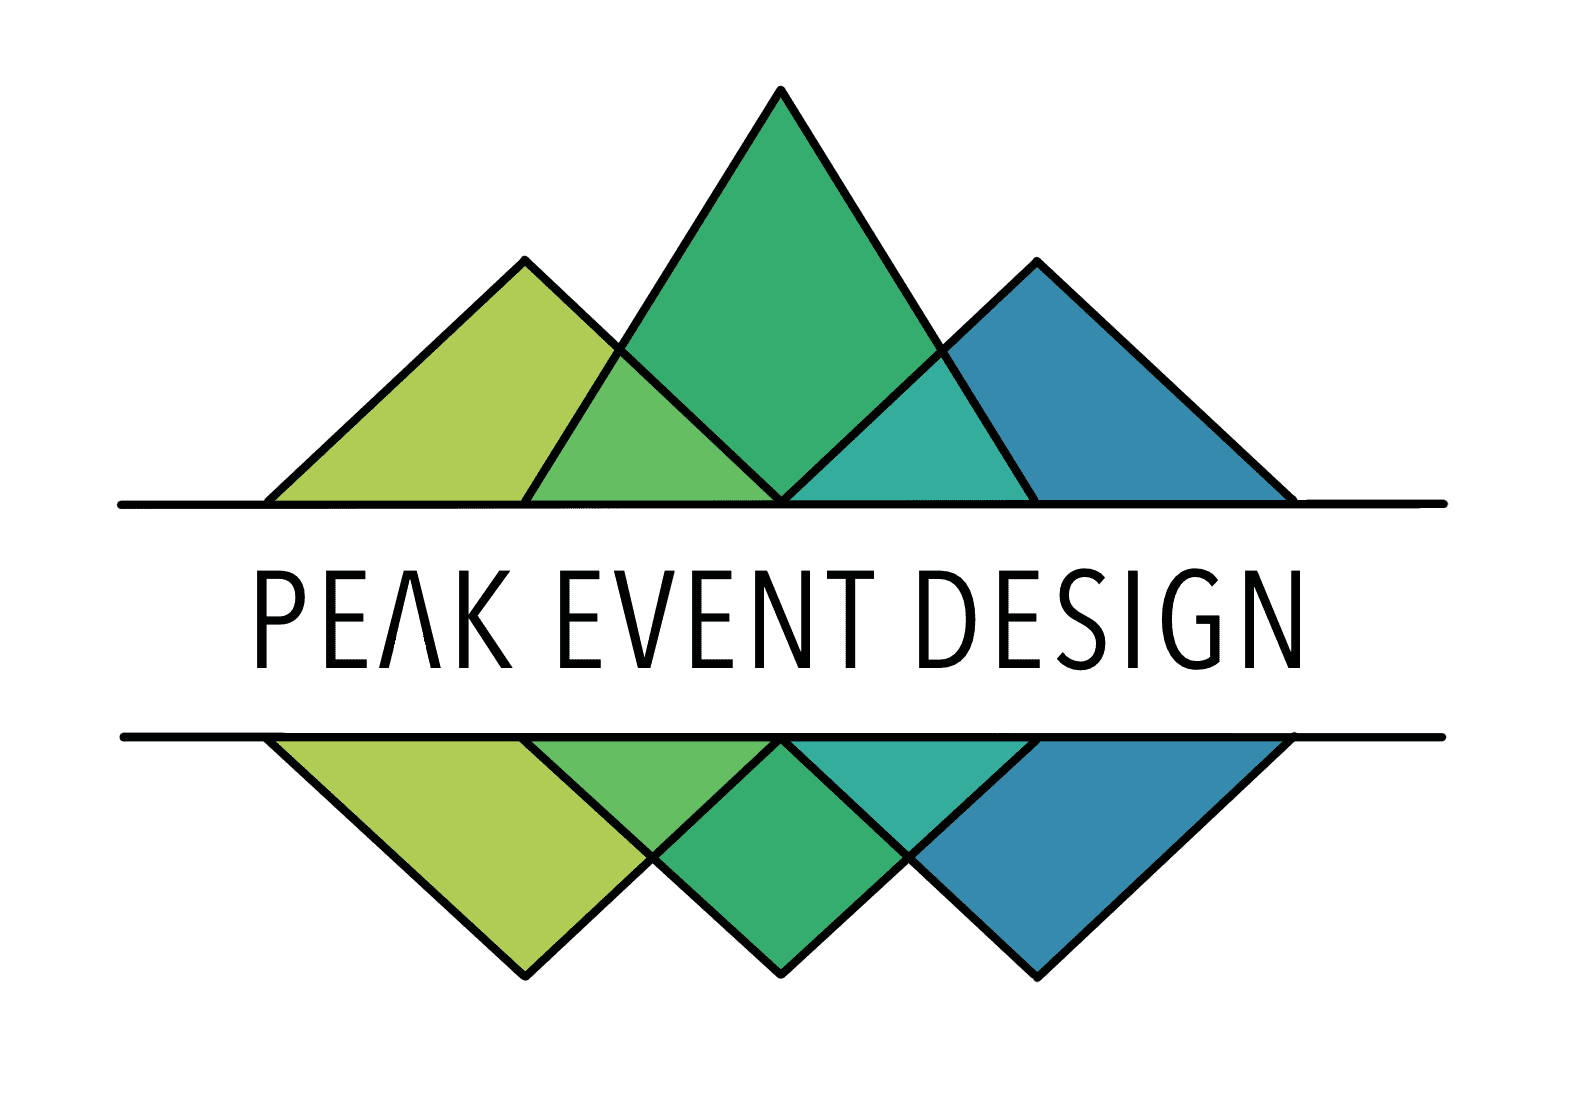 A logo for peak event design